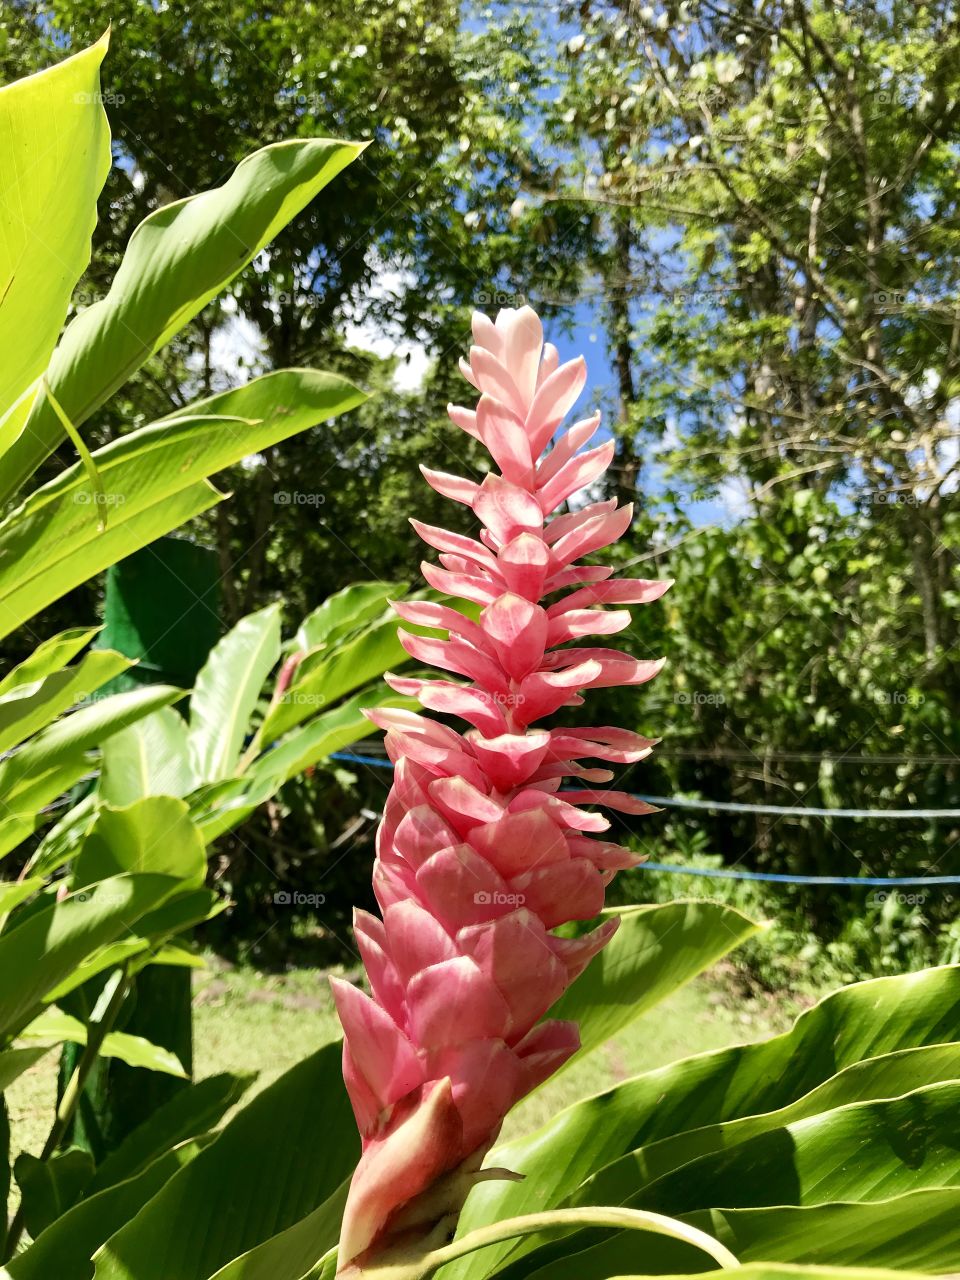 Beautiful flower from Costa Rica. Taken at Pozo Azul Adventure Park near Puerto Viejo, Costa Rica in July 2018. 